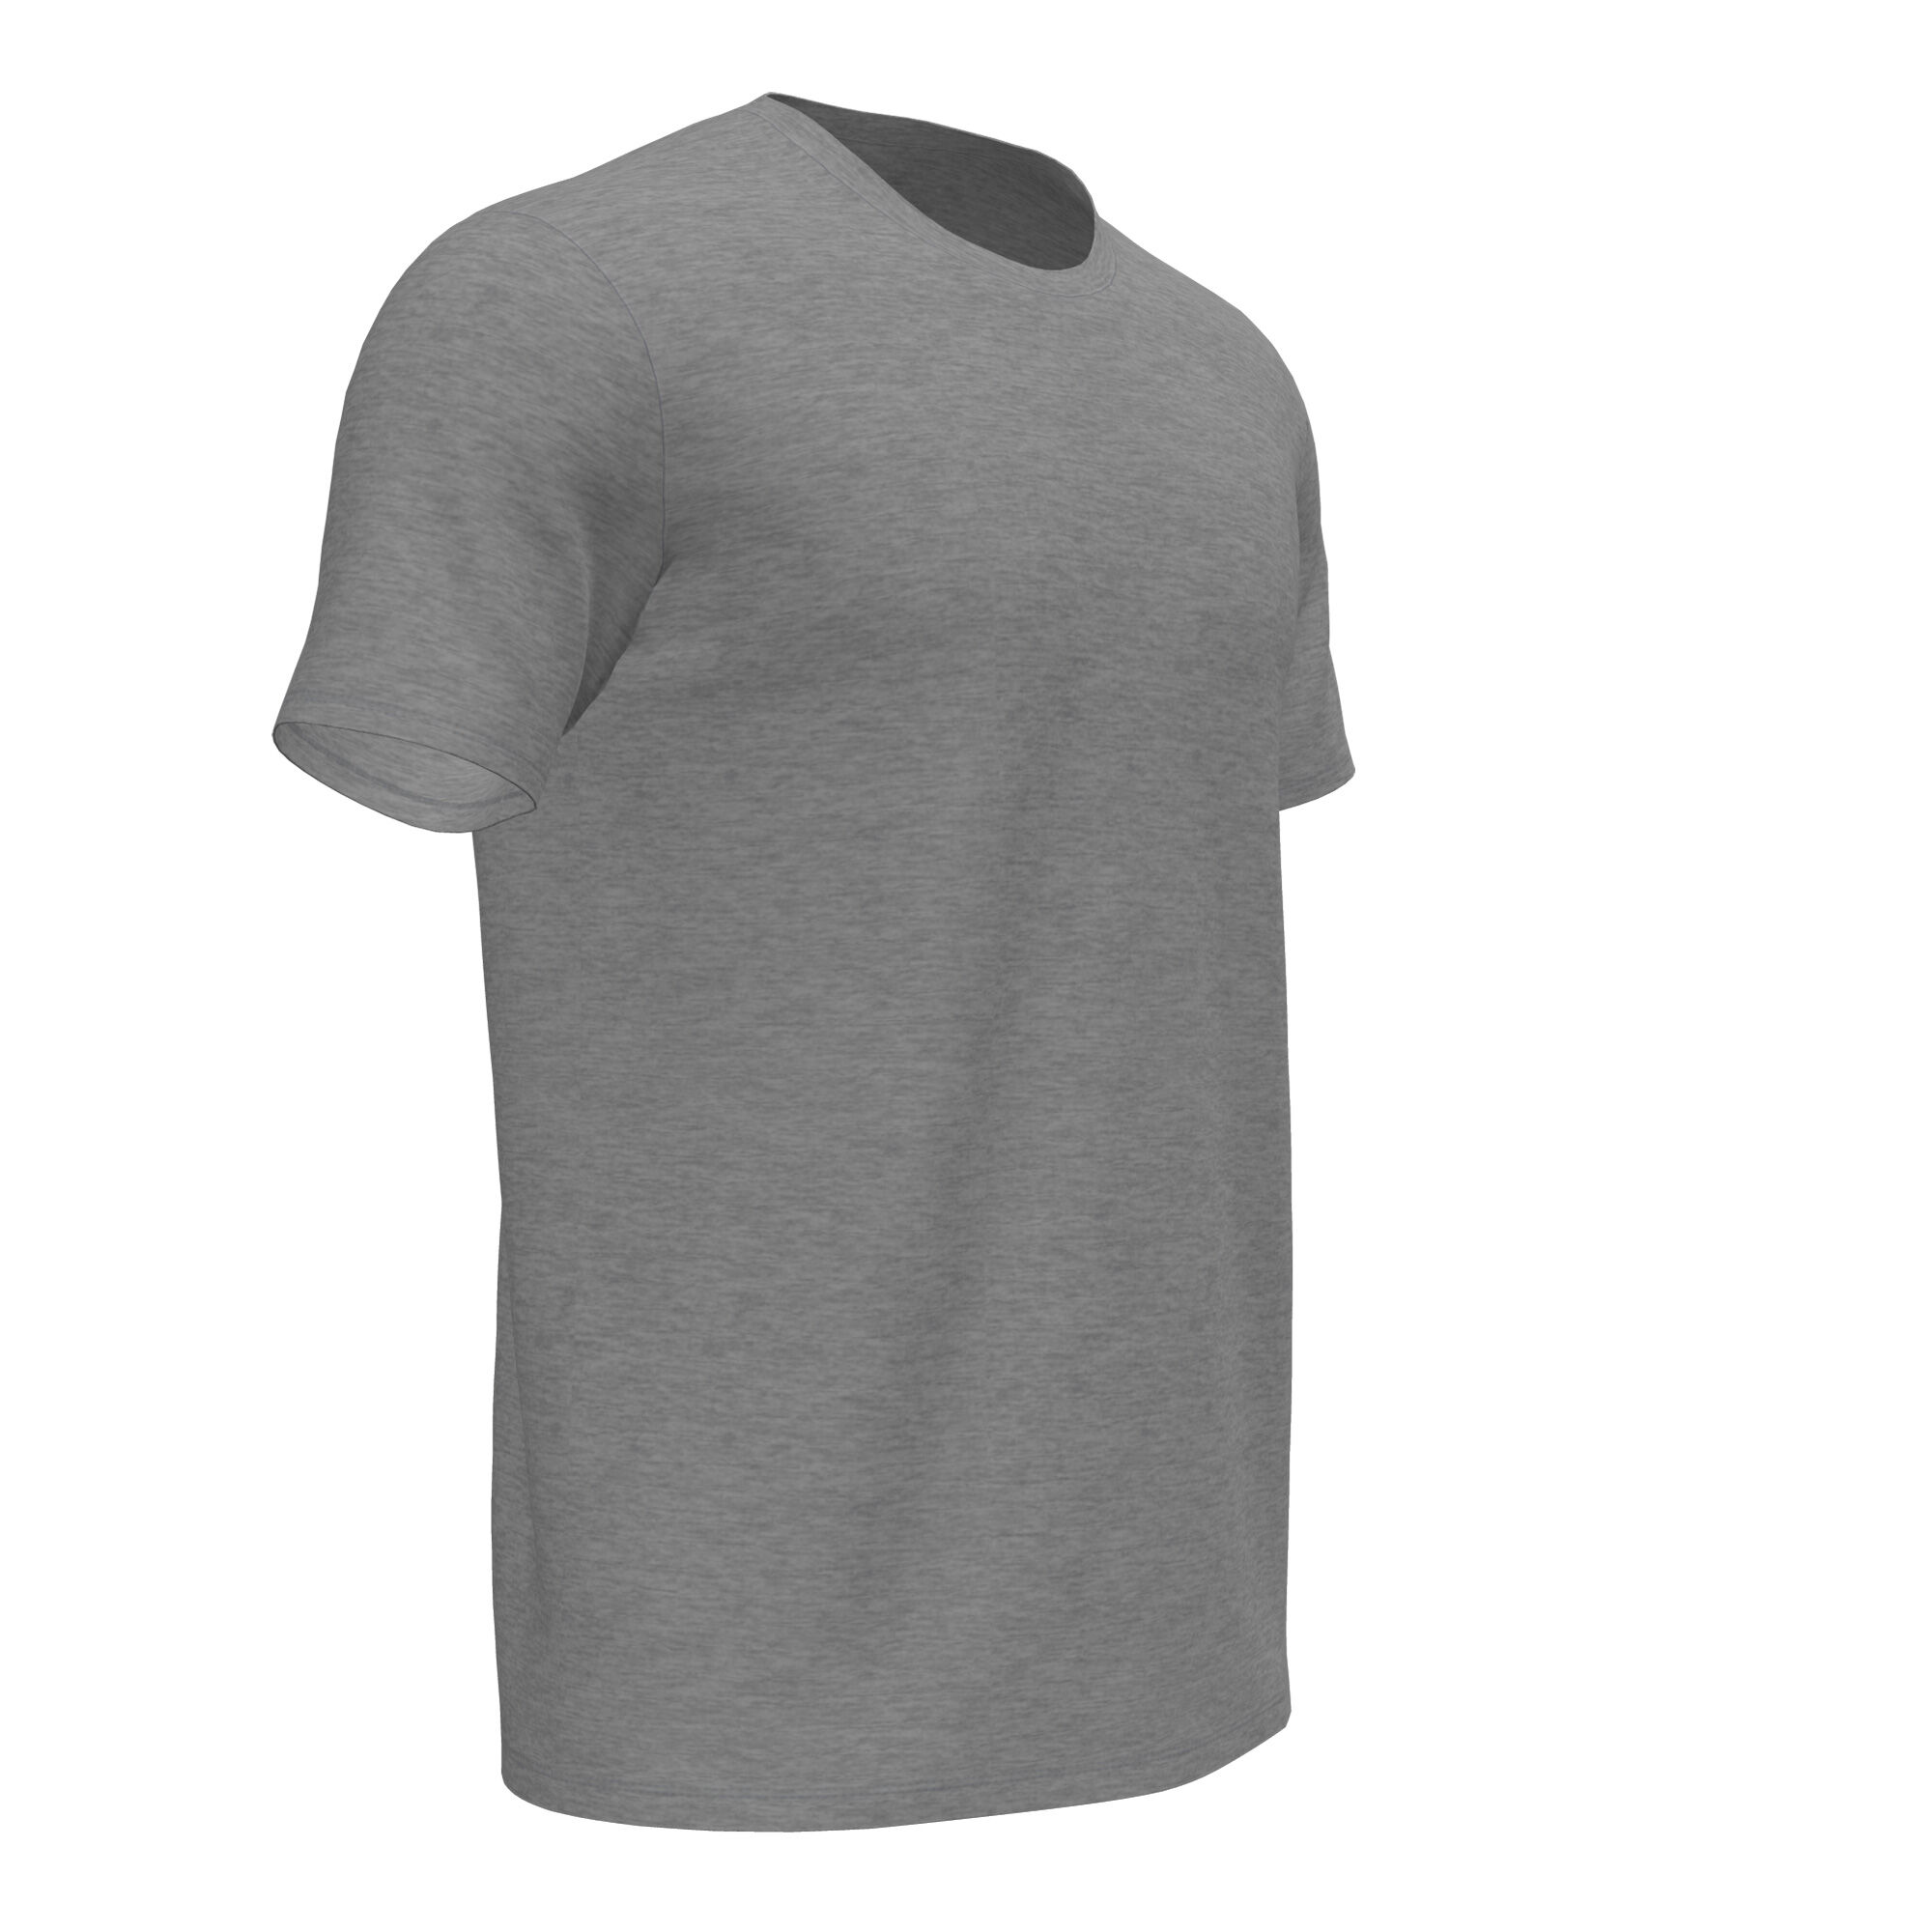 Shirt short sleeve man Sydney gray